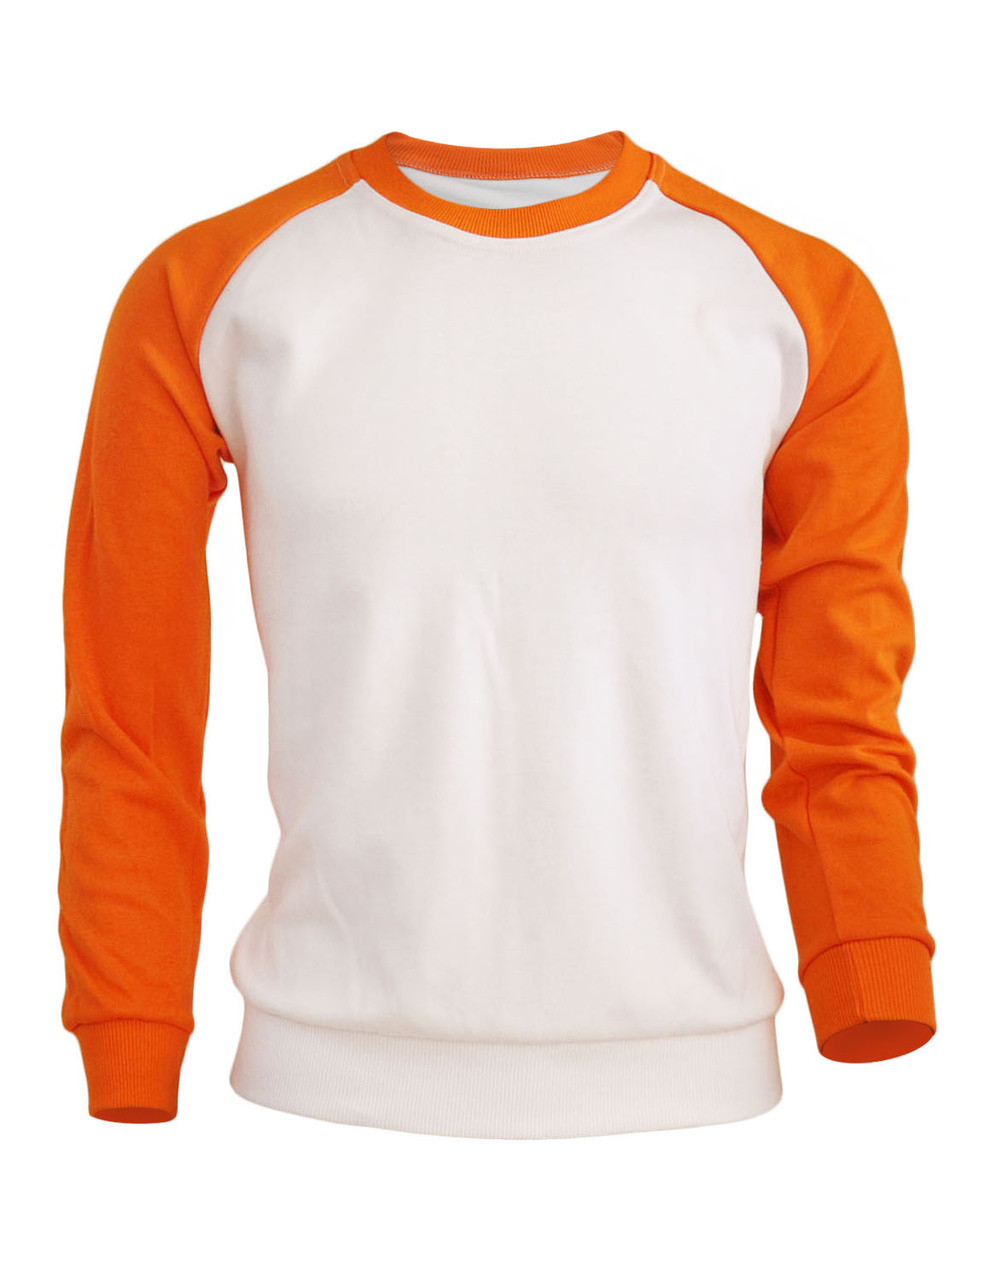 BCPOLO Men's Casual raglan 2 tone color t-shirt sportswear fashion crew ...